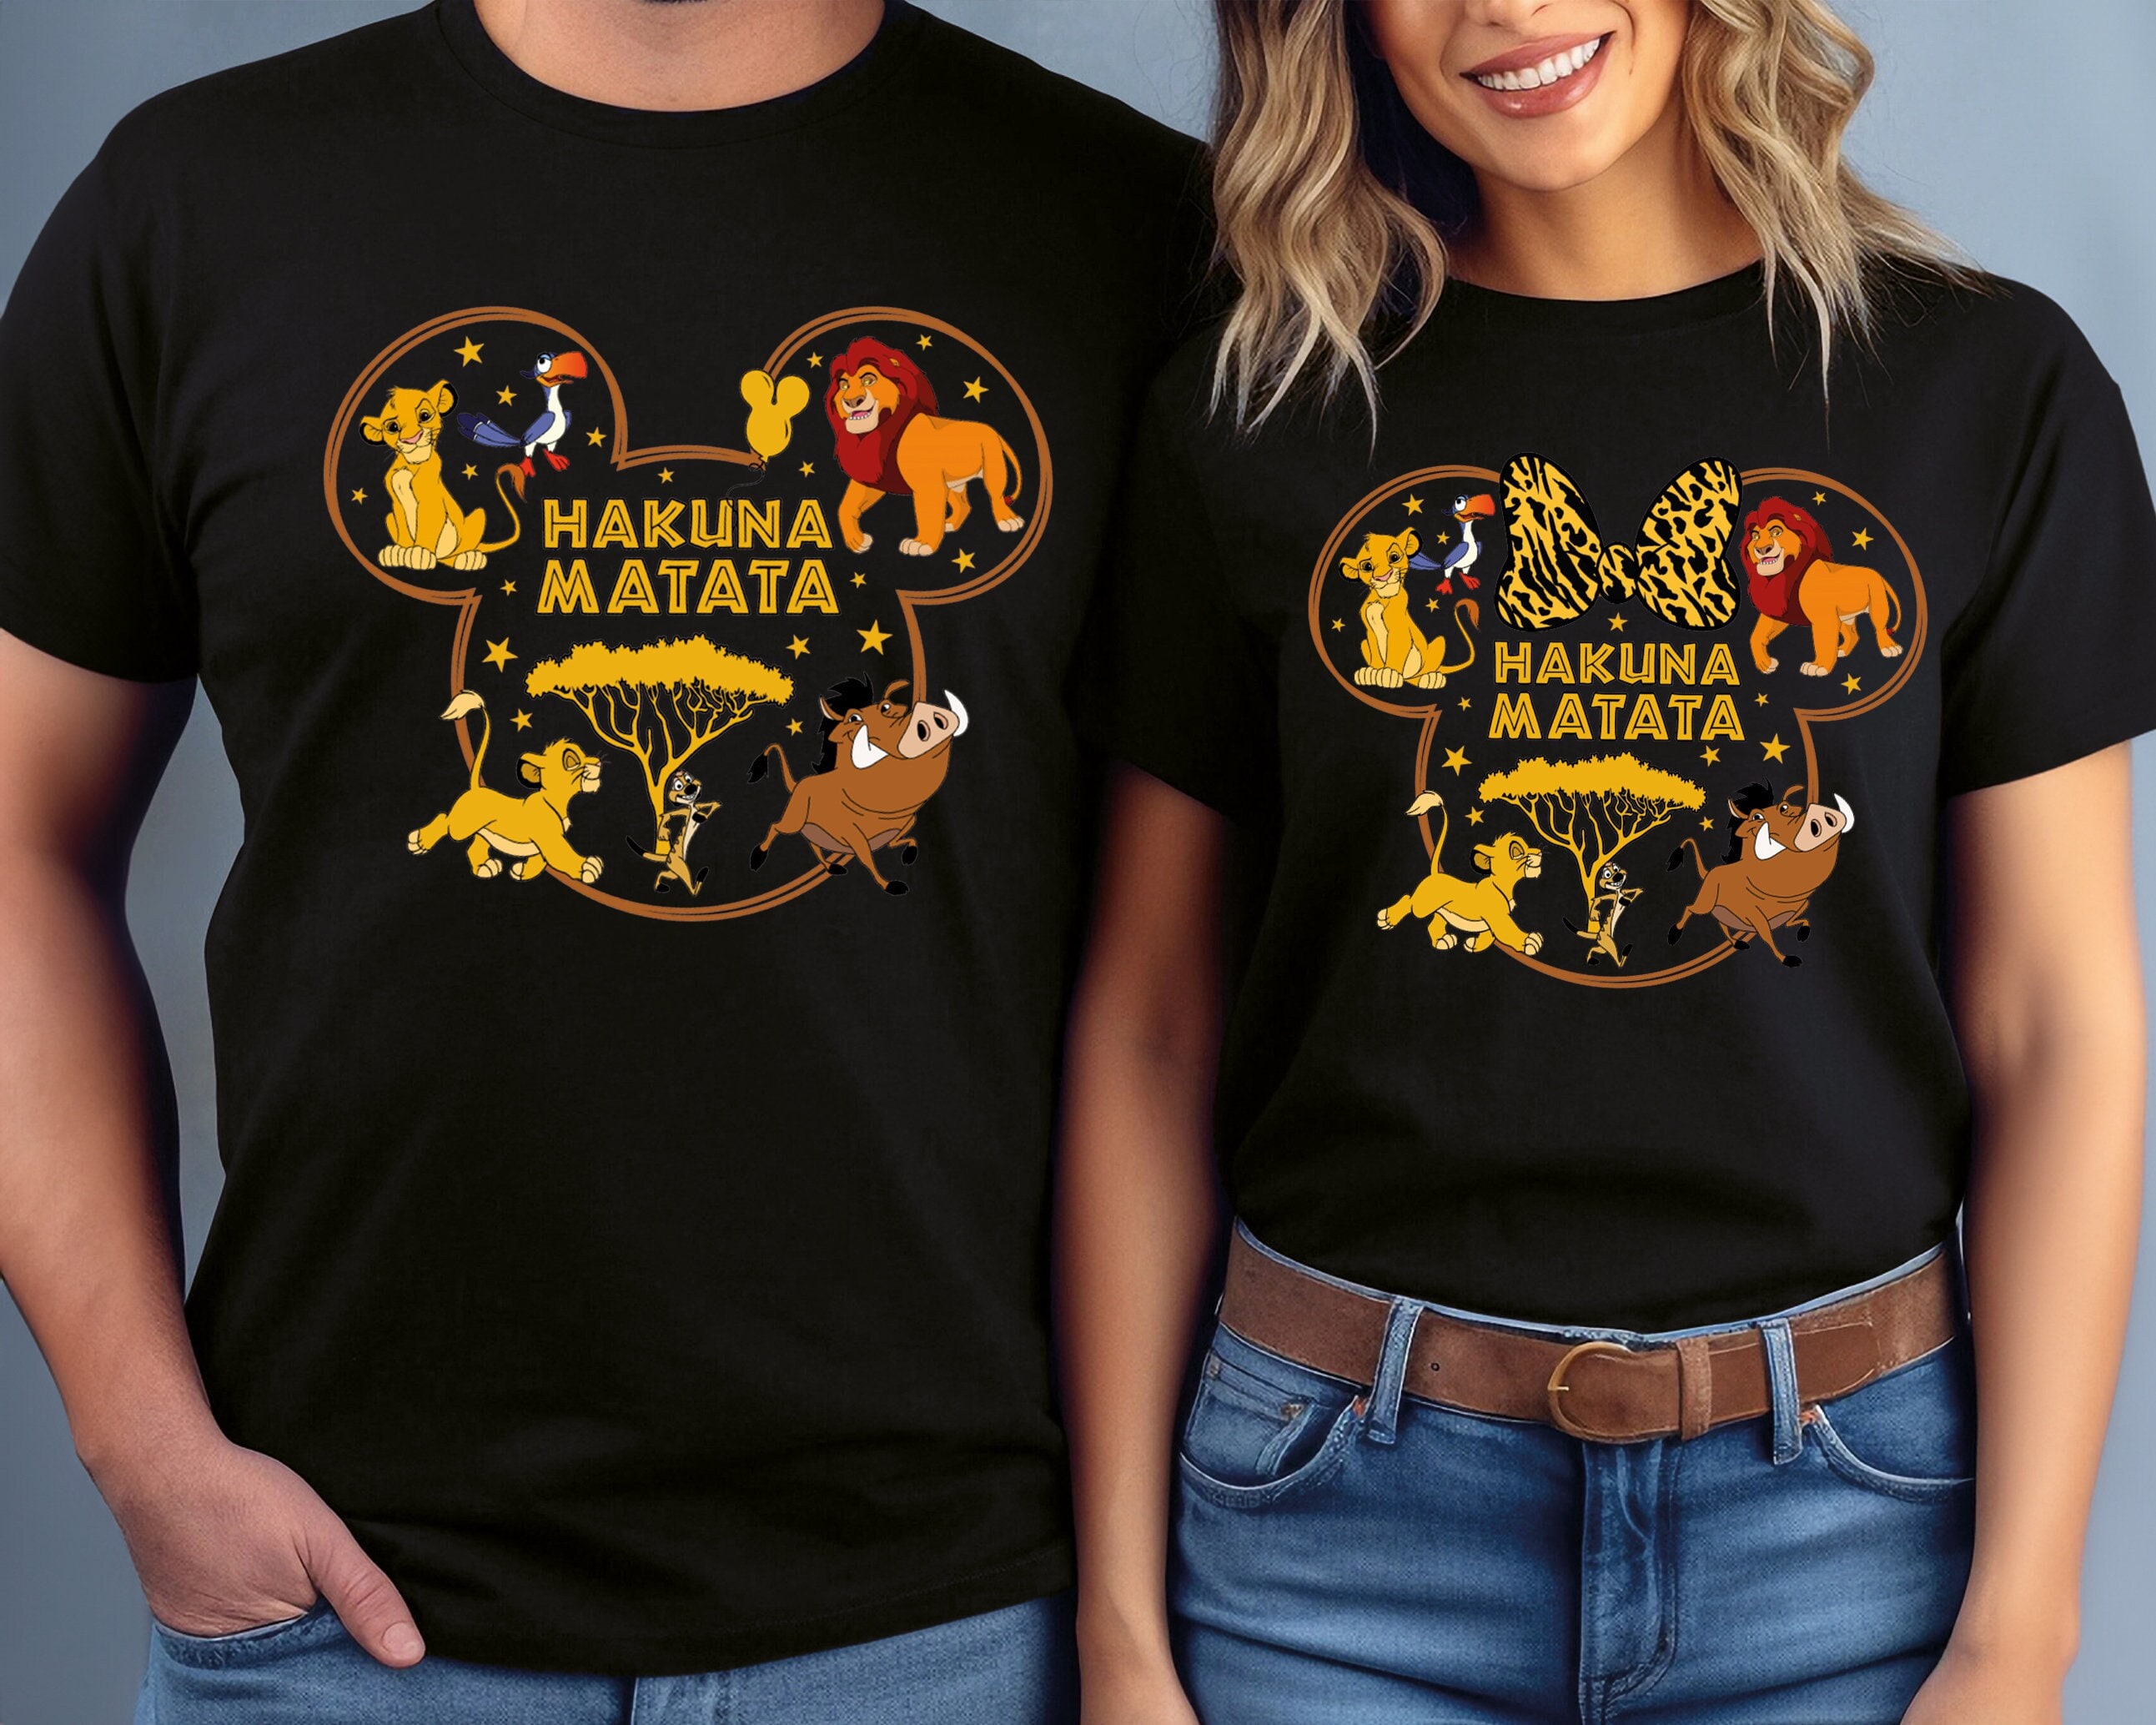 Animal Kingdom Shirt, Hakuna Matata Shirt, Disney Vacation Shirt, Minnie Bow Tee, Mickey Head Shirt, Disney Trip Shirt, Disney Family Shirts